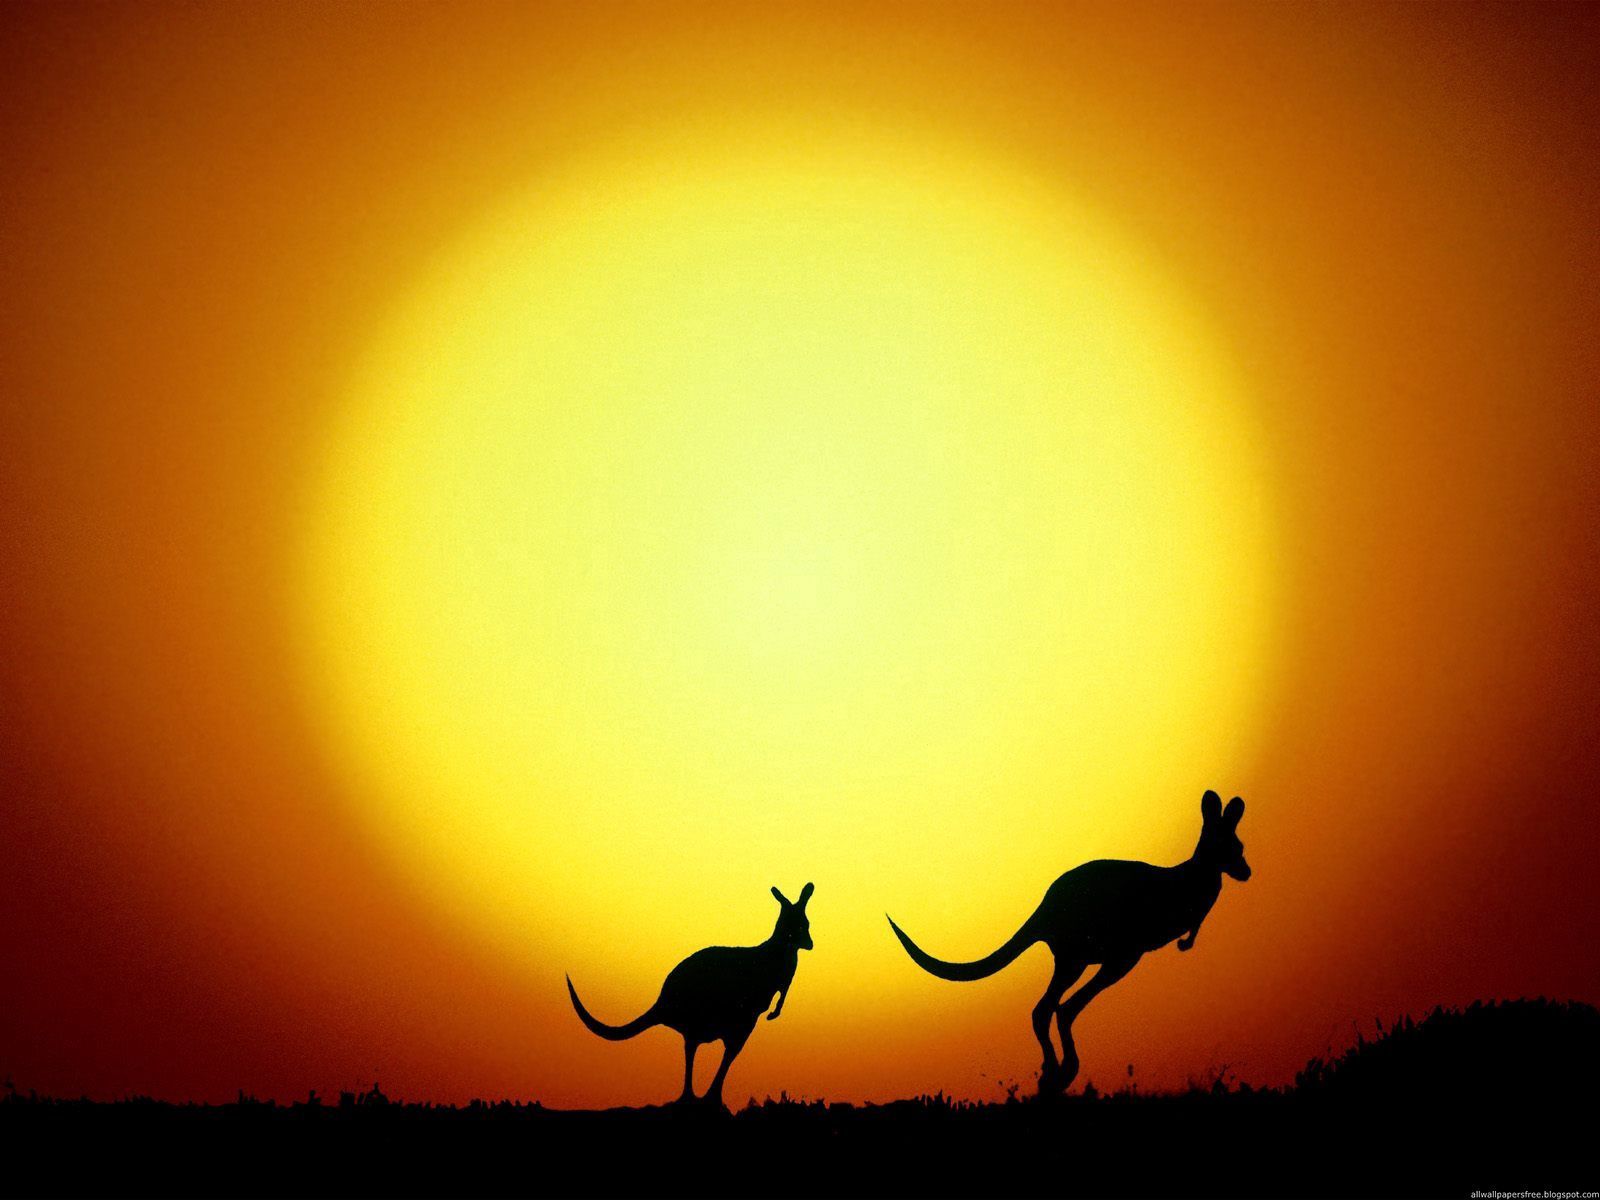 QHD wallpaper evening, australia, nature, silhouettes